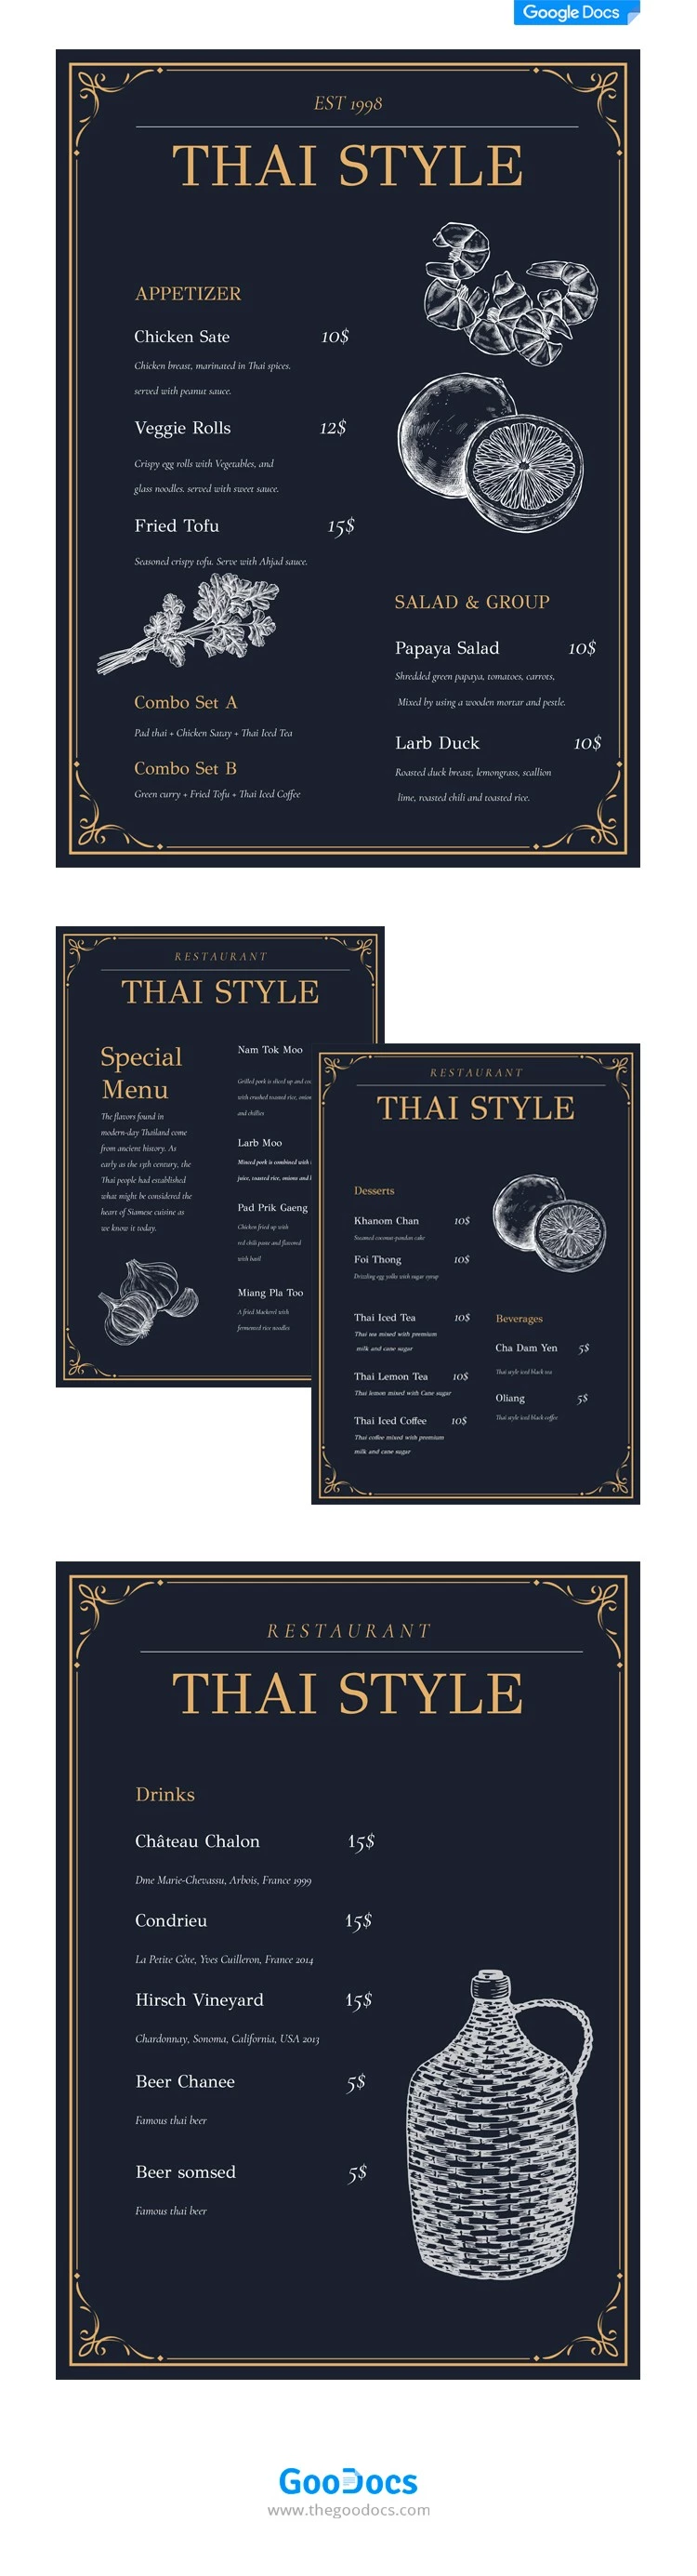 Thai Style Menu - free Google Docs Template - 10062037